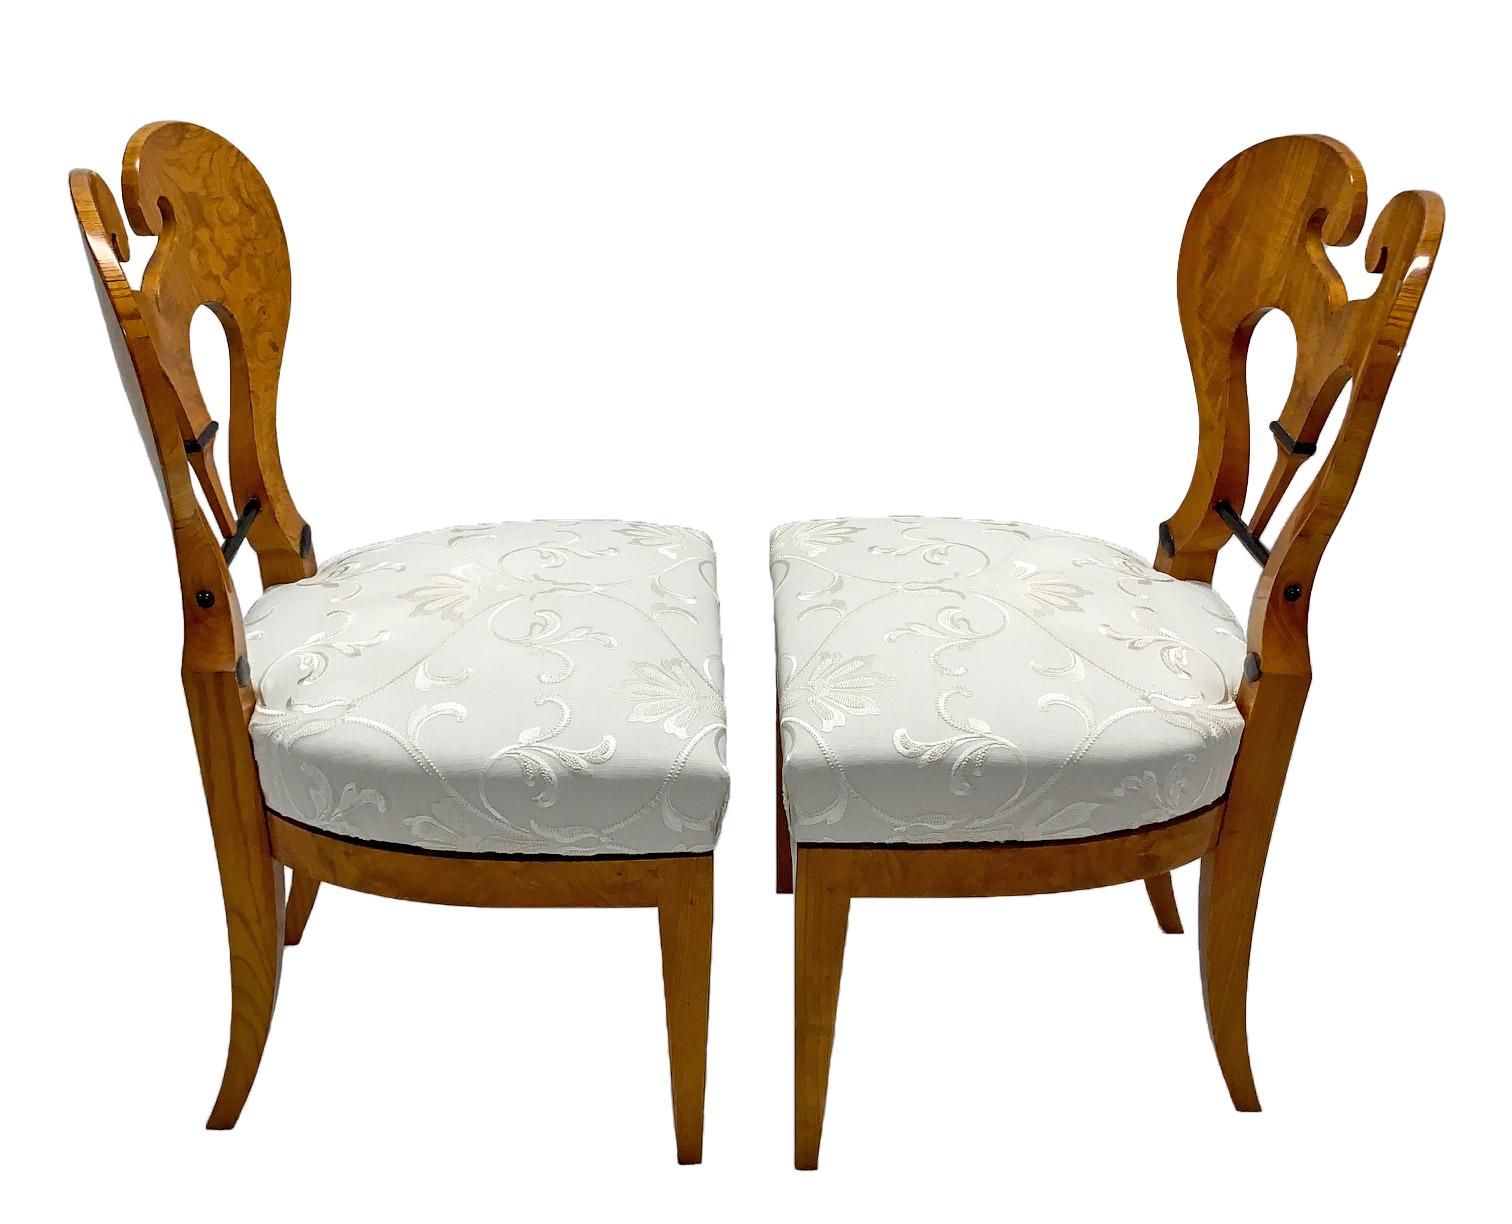 Early 19th Century Set of 4 Austrian Biedermeier Chairs For Sale 2